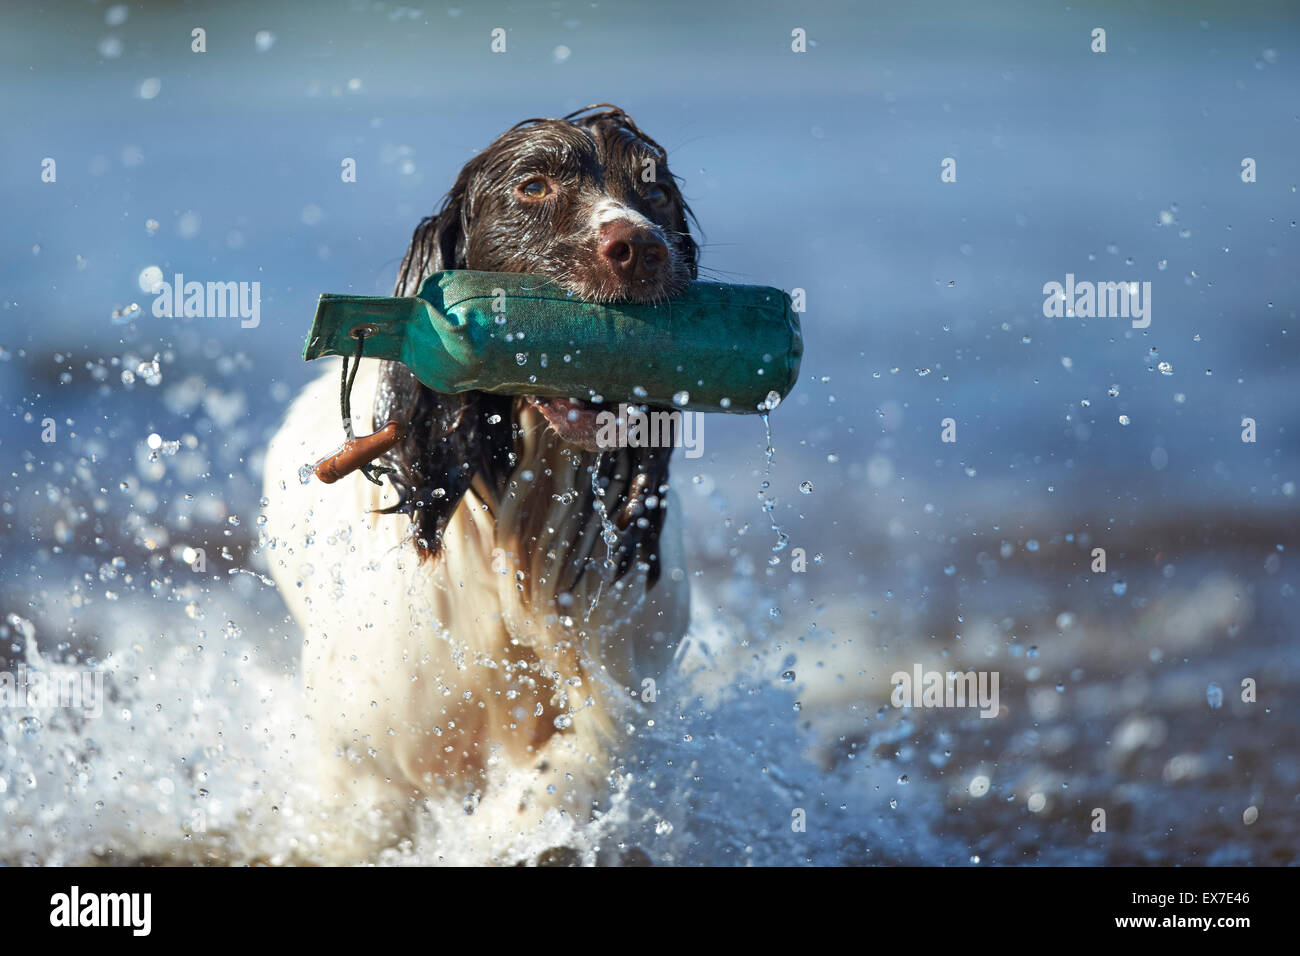 Working spaniel retrieving test dummy in water during summer heatwave Stock Photo